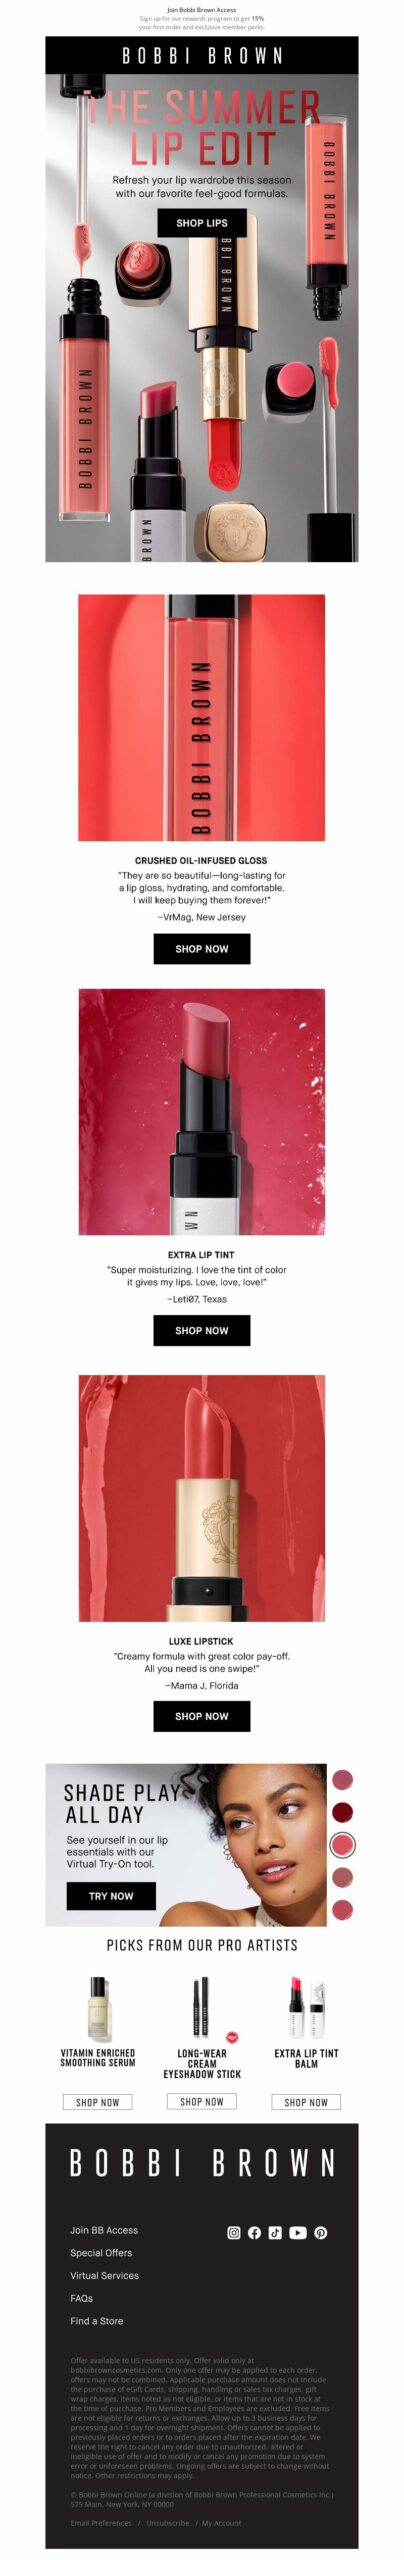 Bobbi Brown Cosmetics, Lipstick Day edit, email marketing campaign. 